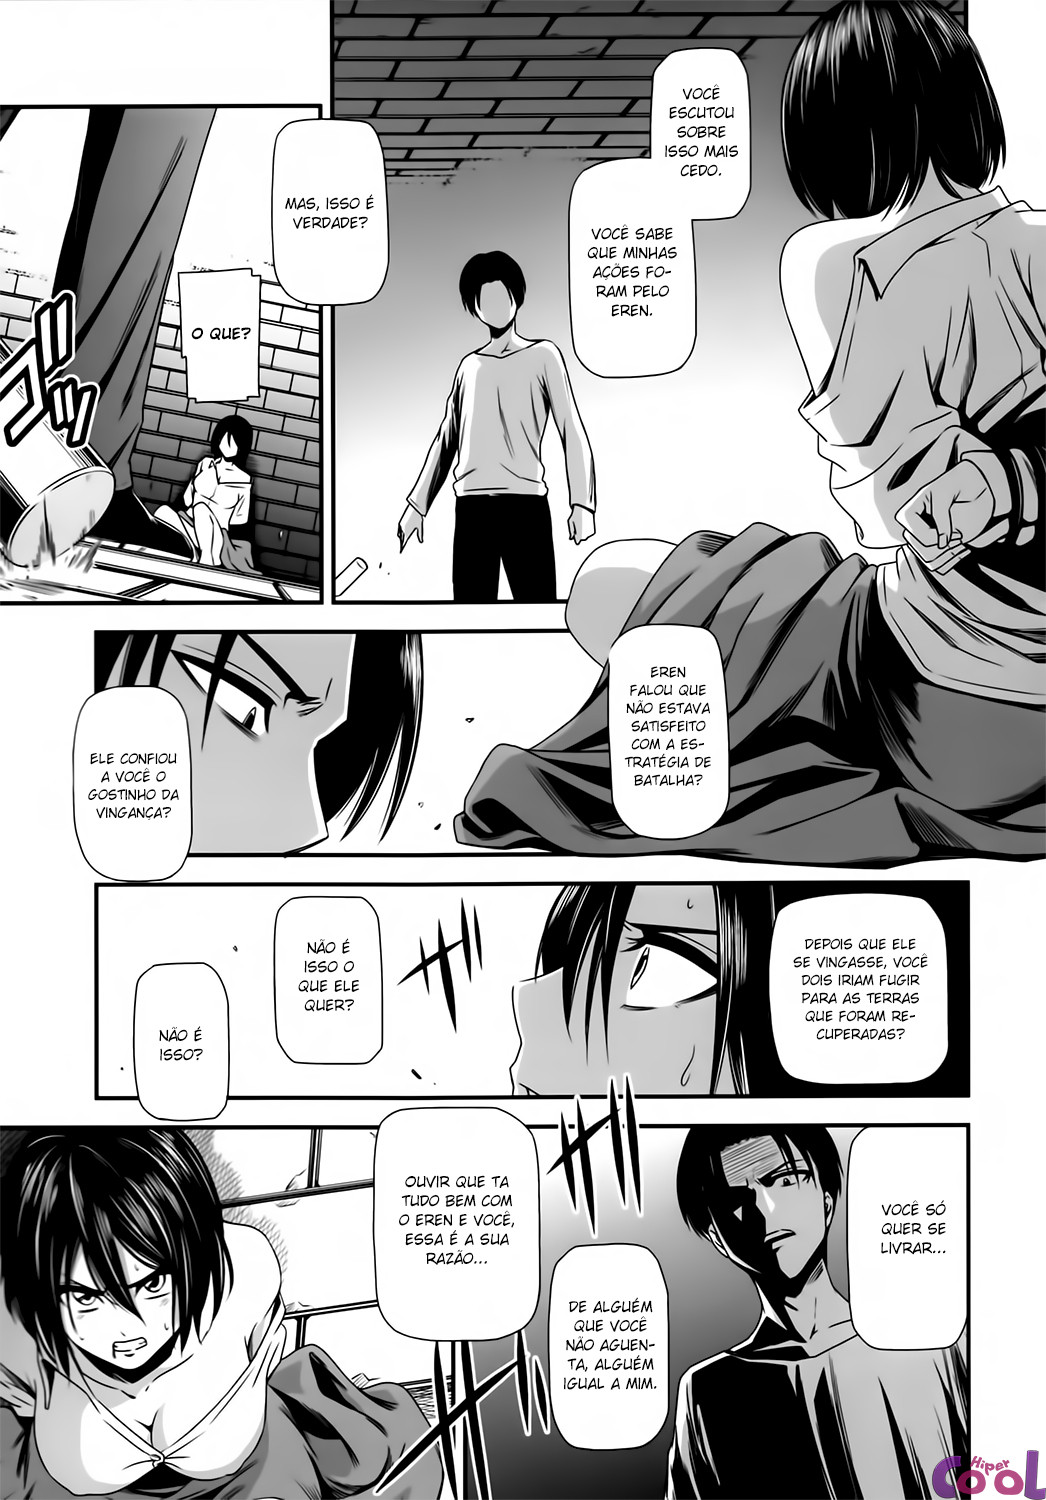 gekishin-ni-chapter-01-page-09.jpg